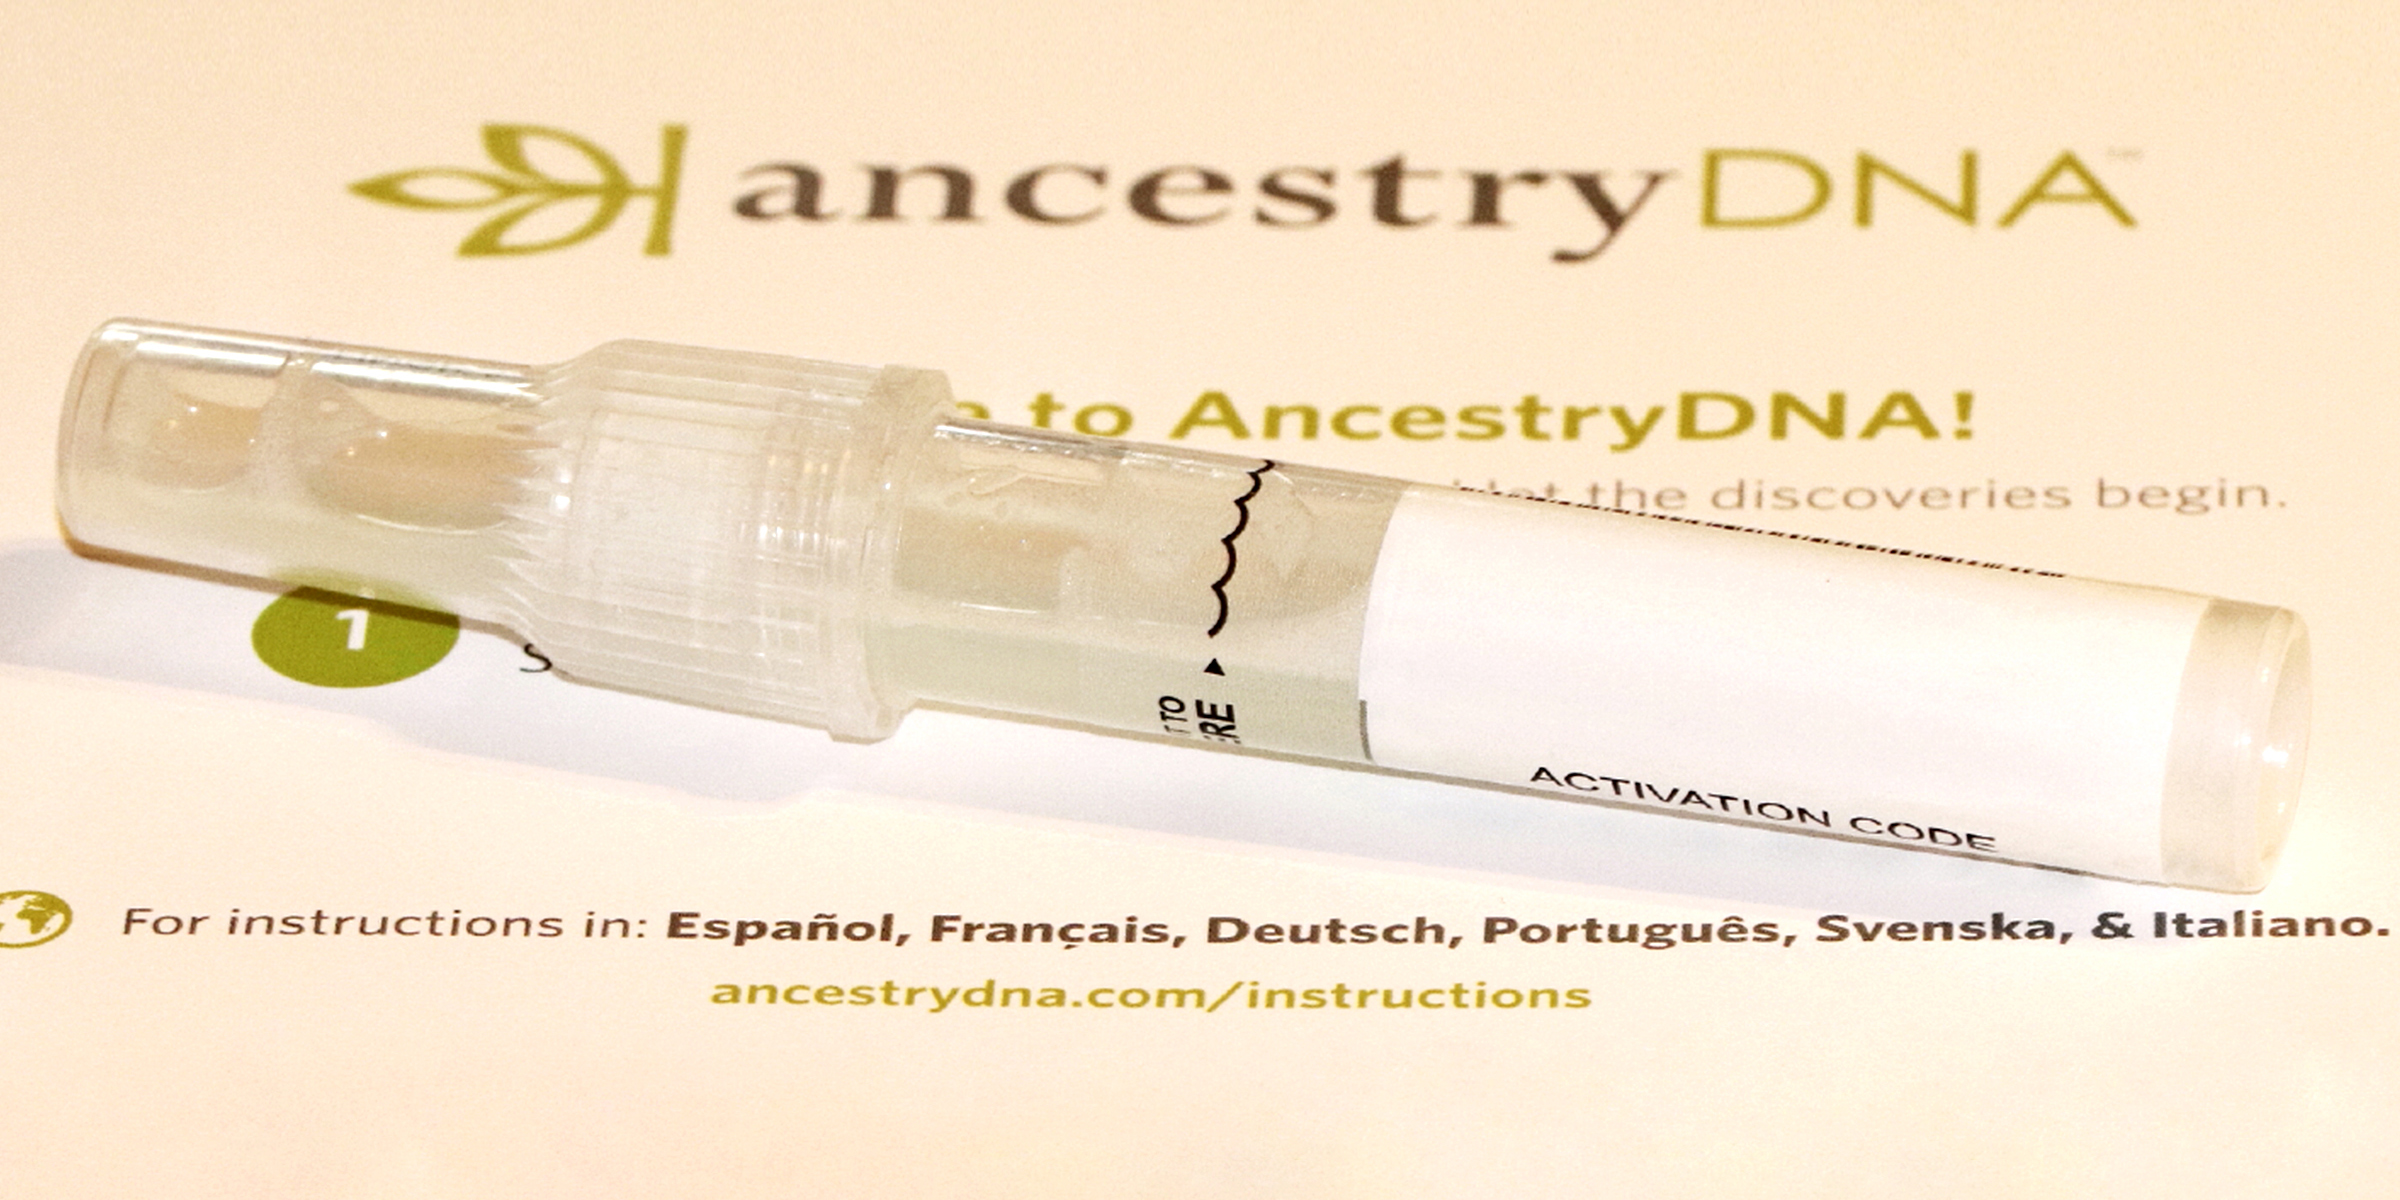 Un kit de pruebas de ADN. | Foto: Flickr.com/Lisa Zins (CC BY 2.0)